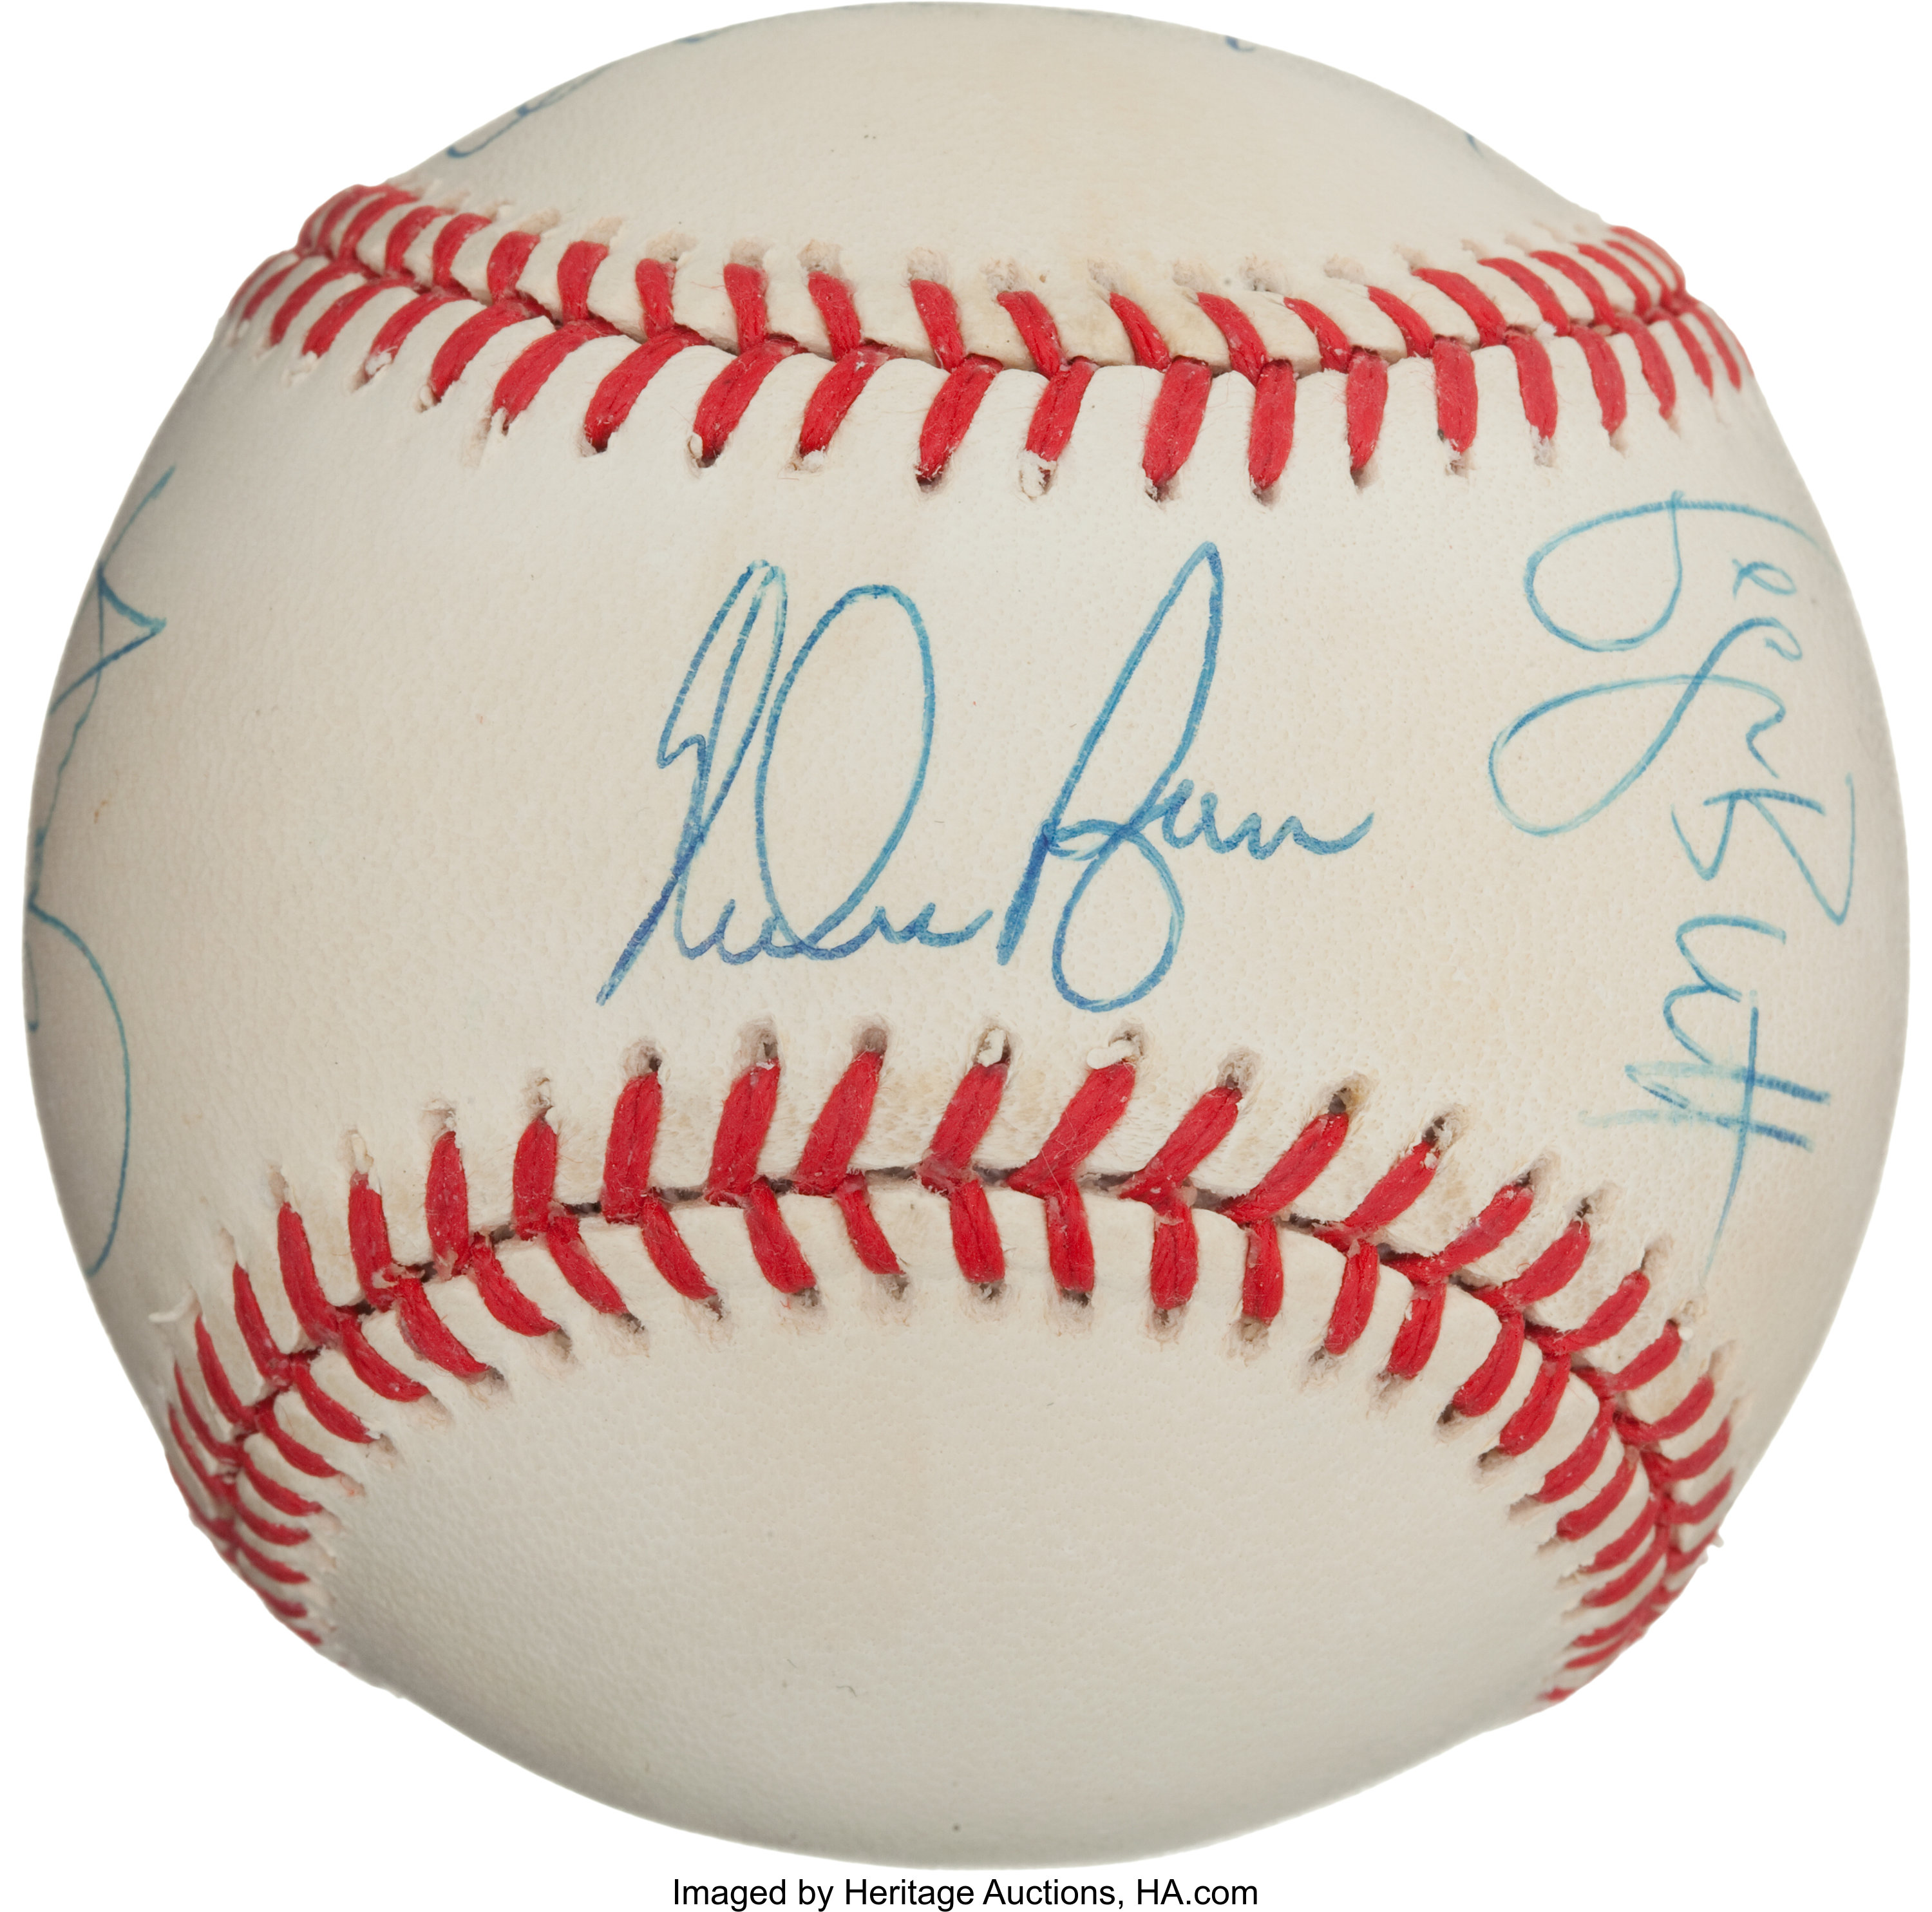 Orlando Cepeda Autographed HOF 99 Baseball